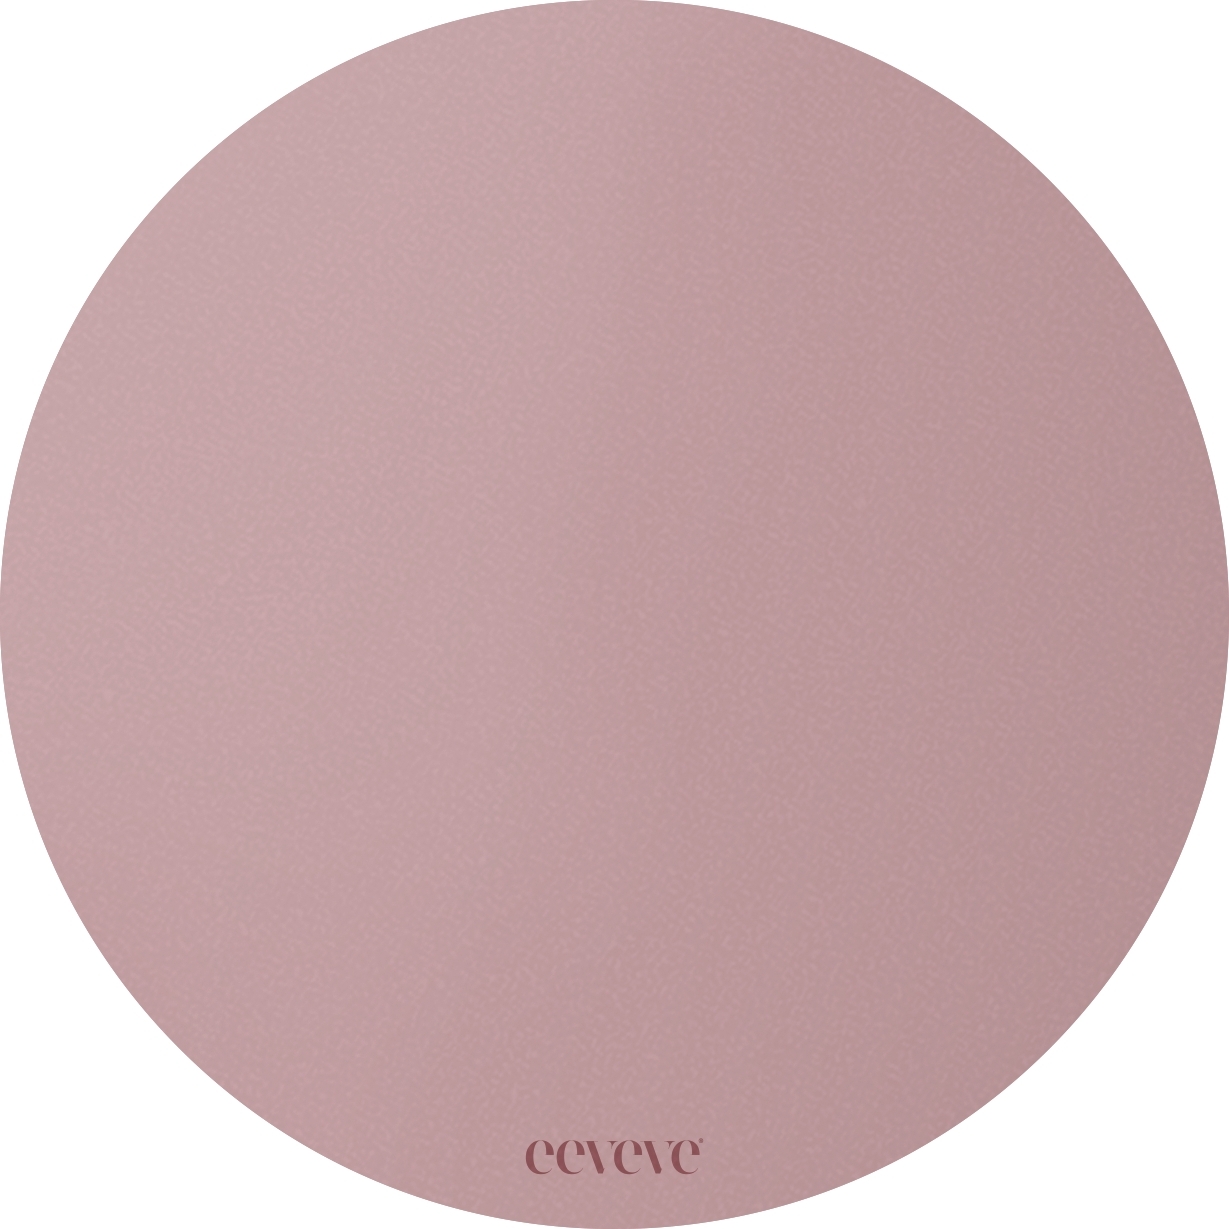 Eeveve Coaster - Old Pink